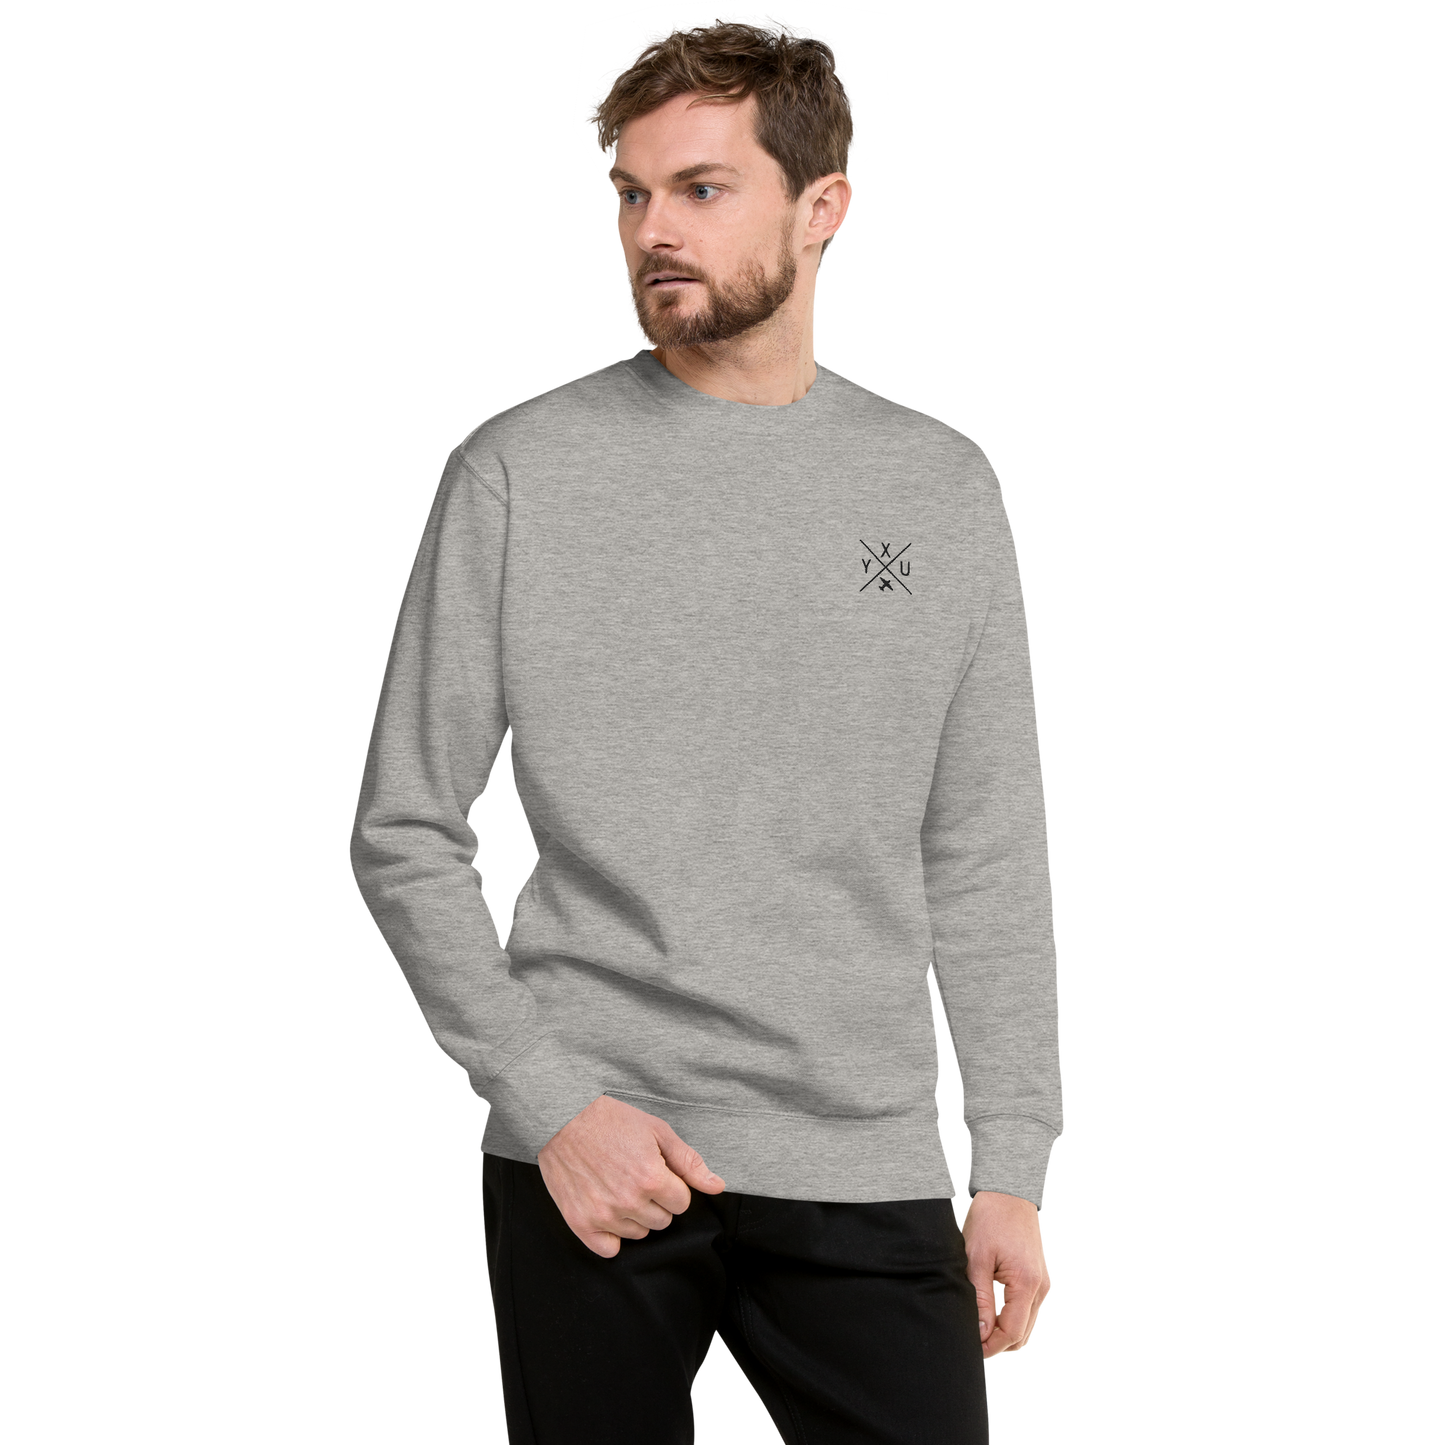 YHM Designs - YXU London Premium Sweatshirt - Crossed-X Design with Airport Code and Vintage Propliner - Black Embroidery - Image 01